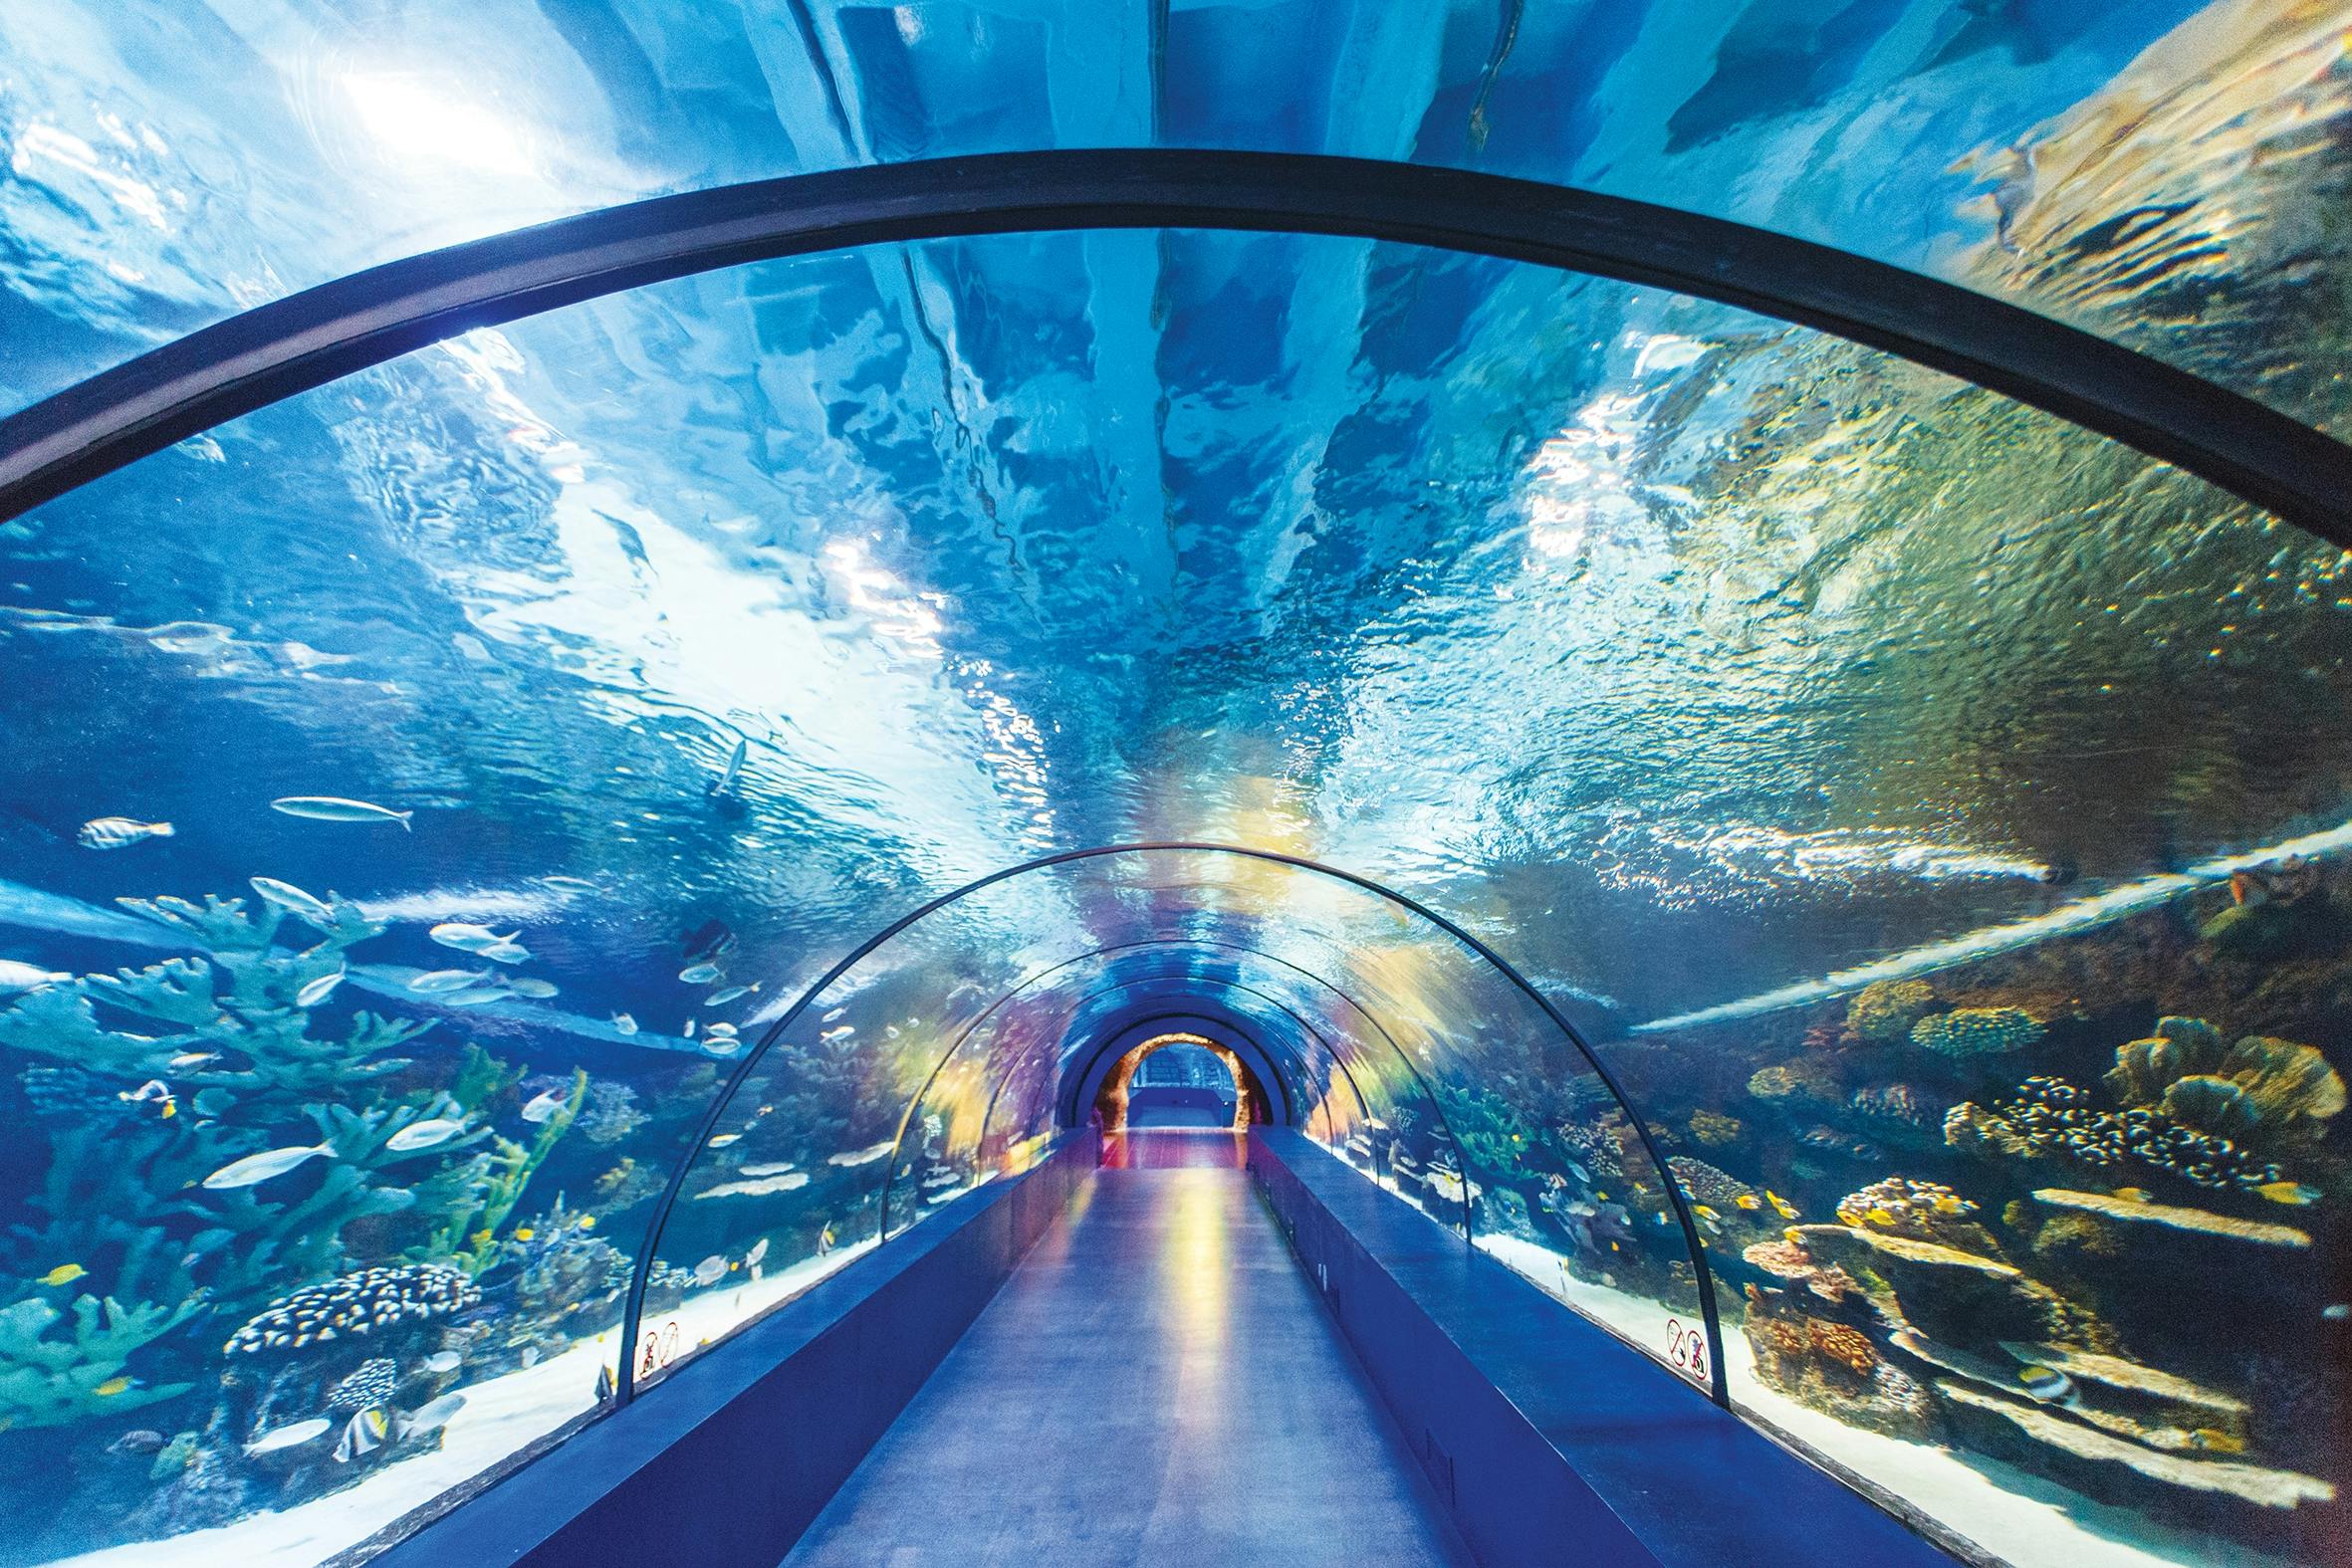 Antalya Aquarium entrance ticket